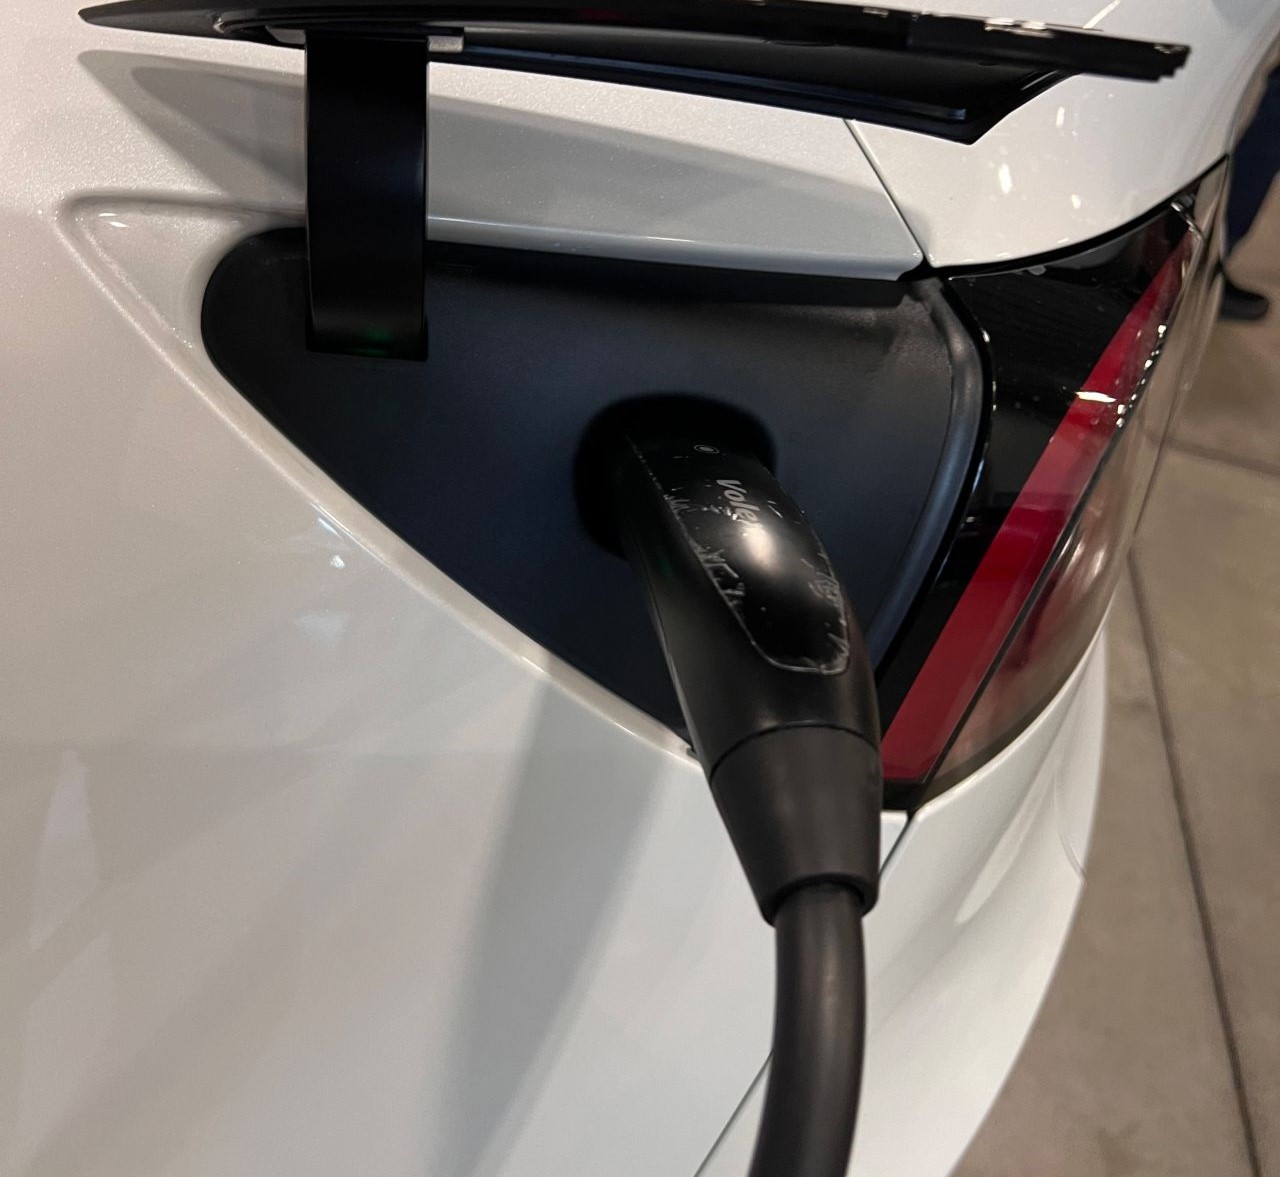 Ekoenergetyka achieves Tesla Standard with AXON Easy charging station